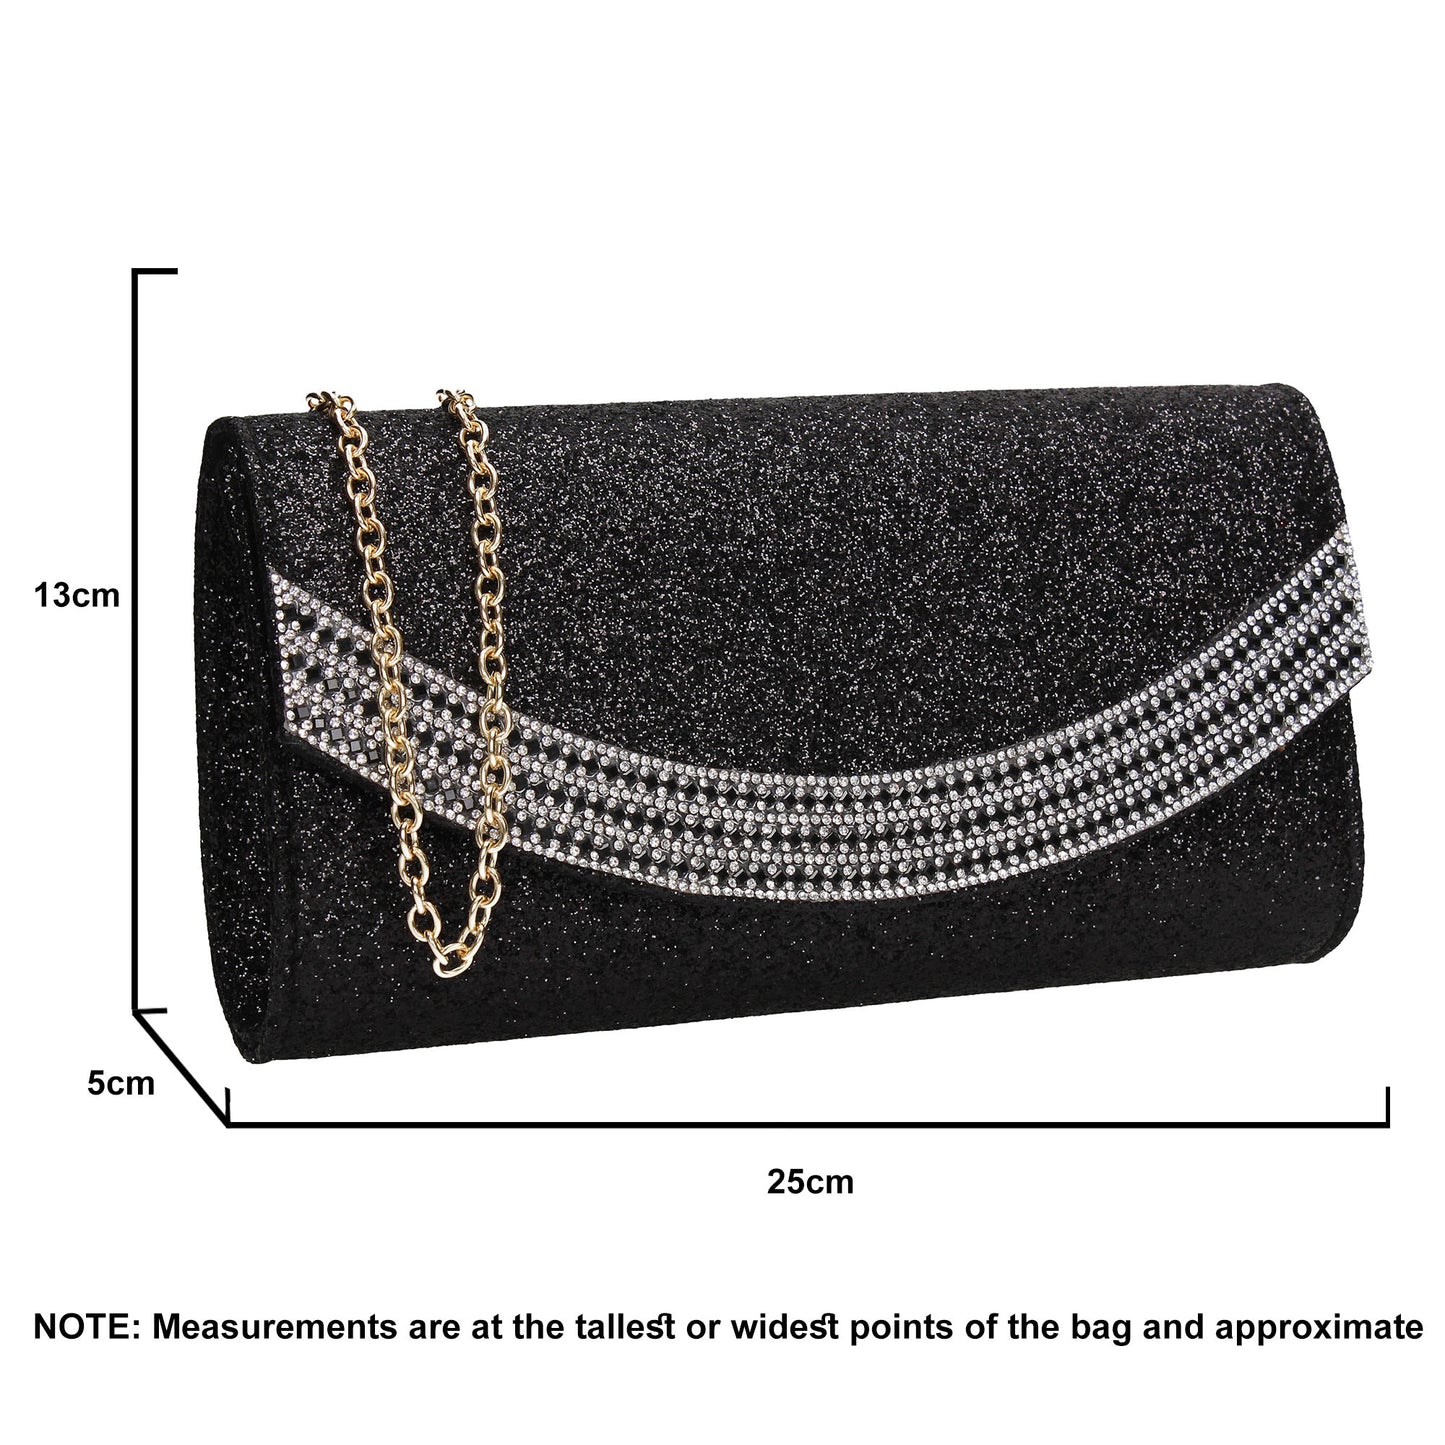 SWANKYSWANS Dakota Clutch Bag Black Cute Cheap Clutch Bag For Weddings School and Work